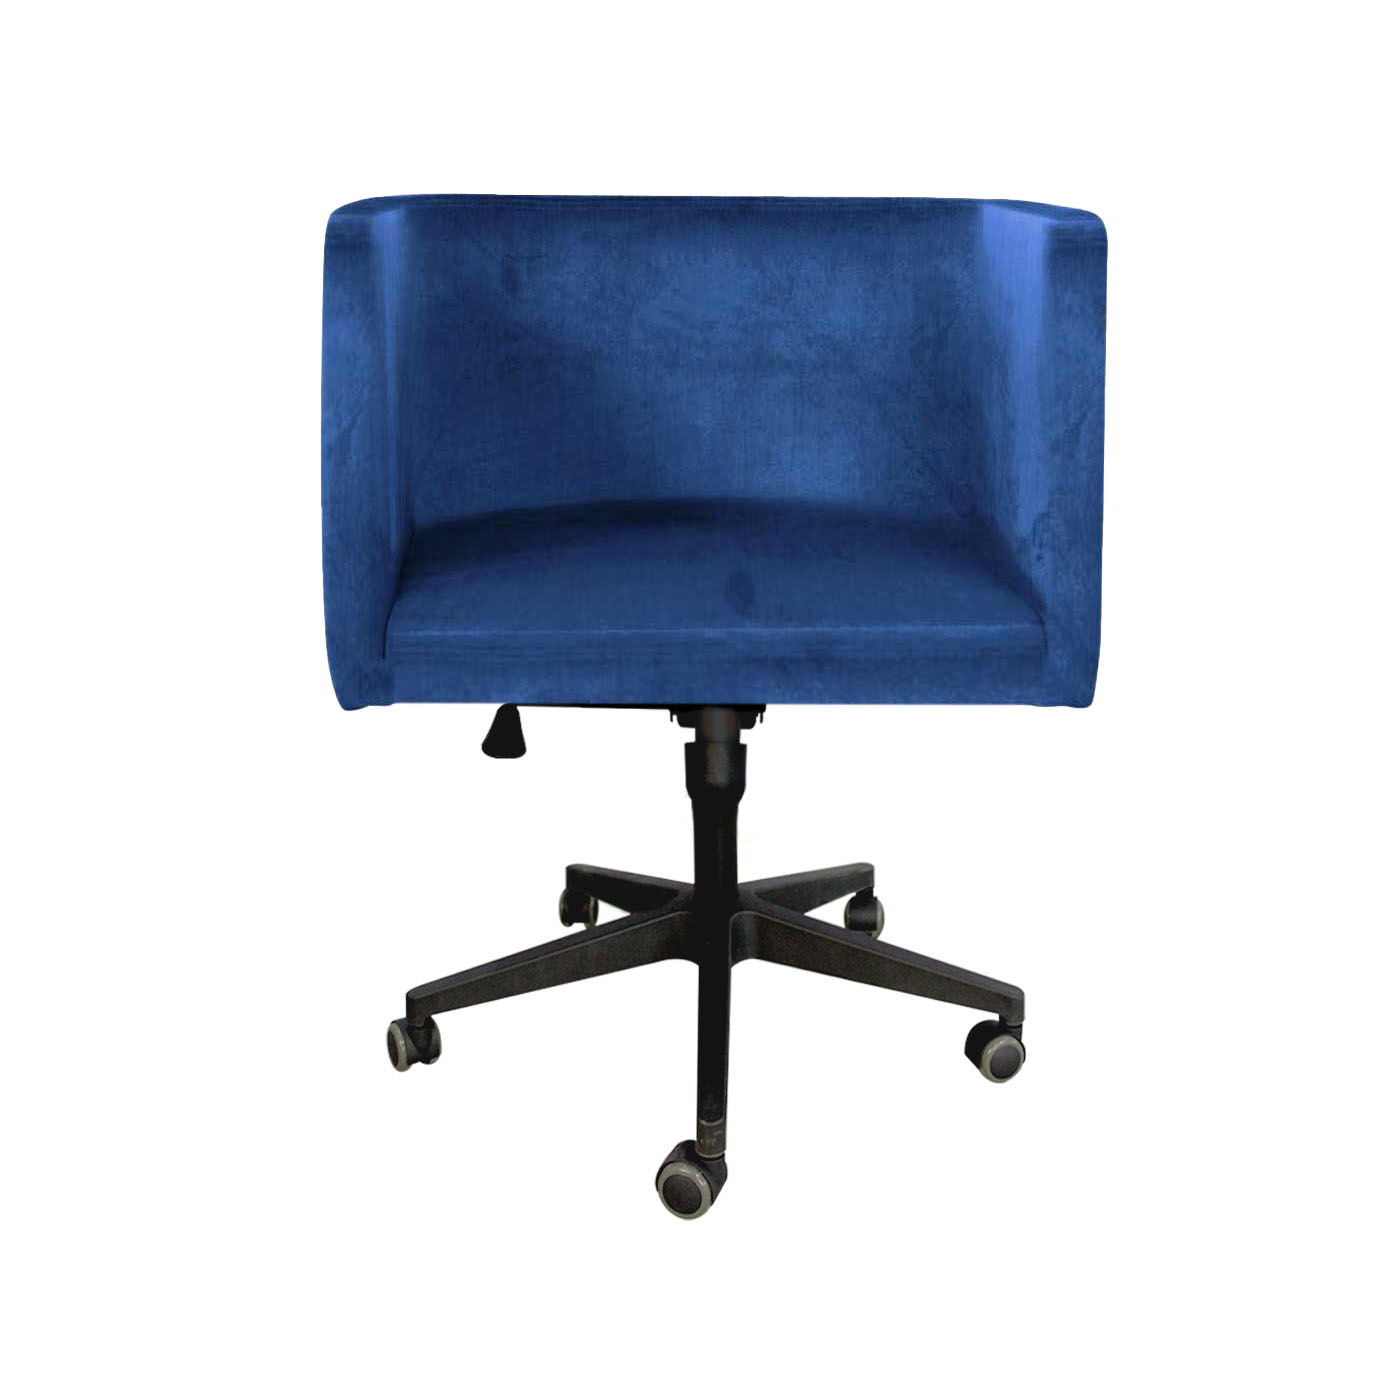 Dalian Dark Blue Office Chair